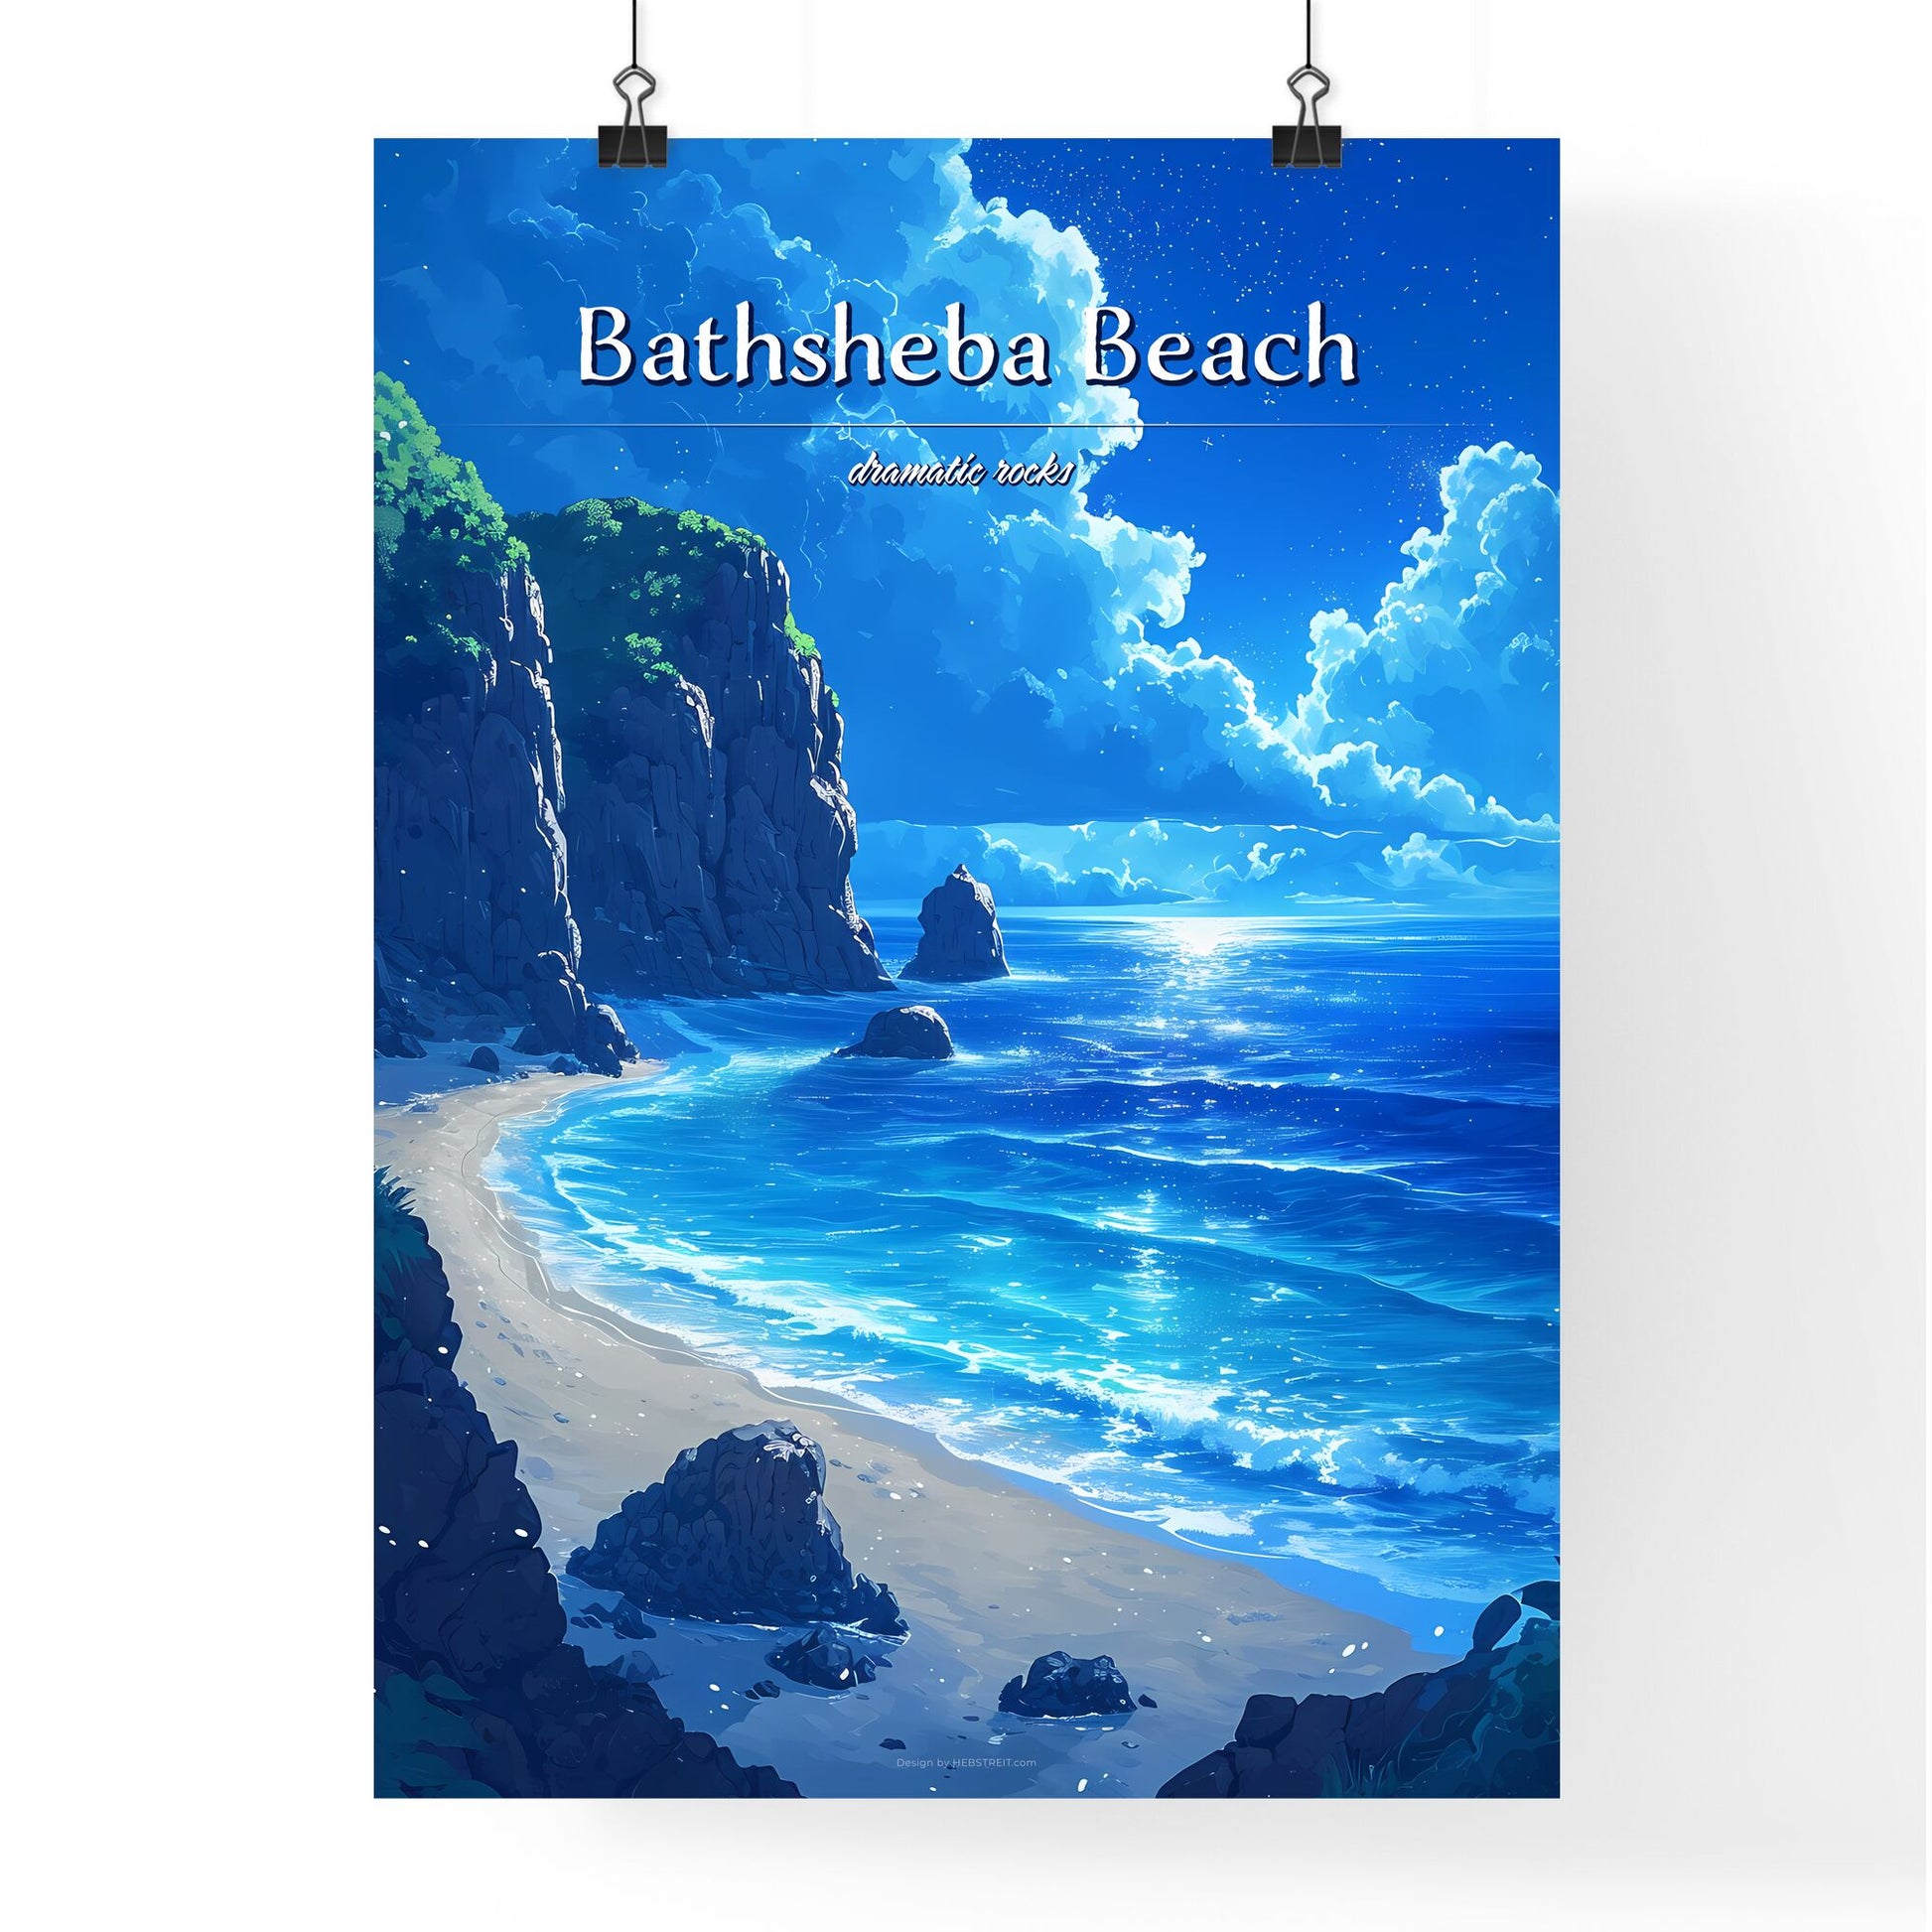 Bathsheba Beach - Art print of a beach with rocks and water Default Title